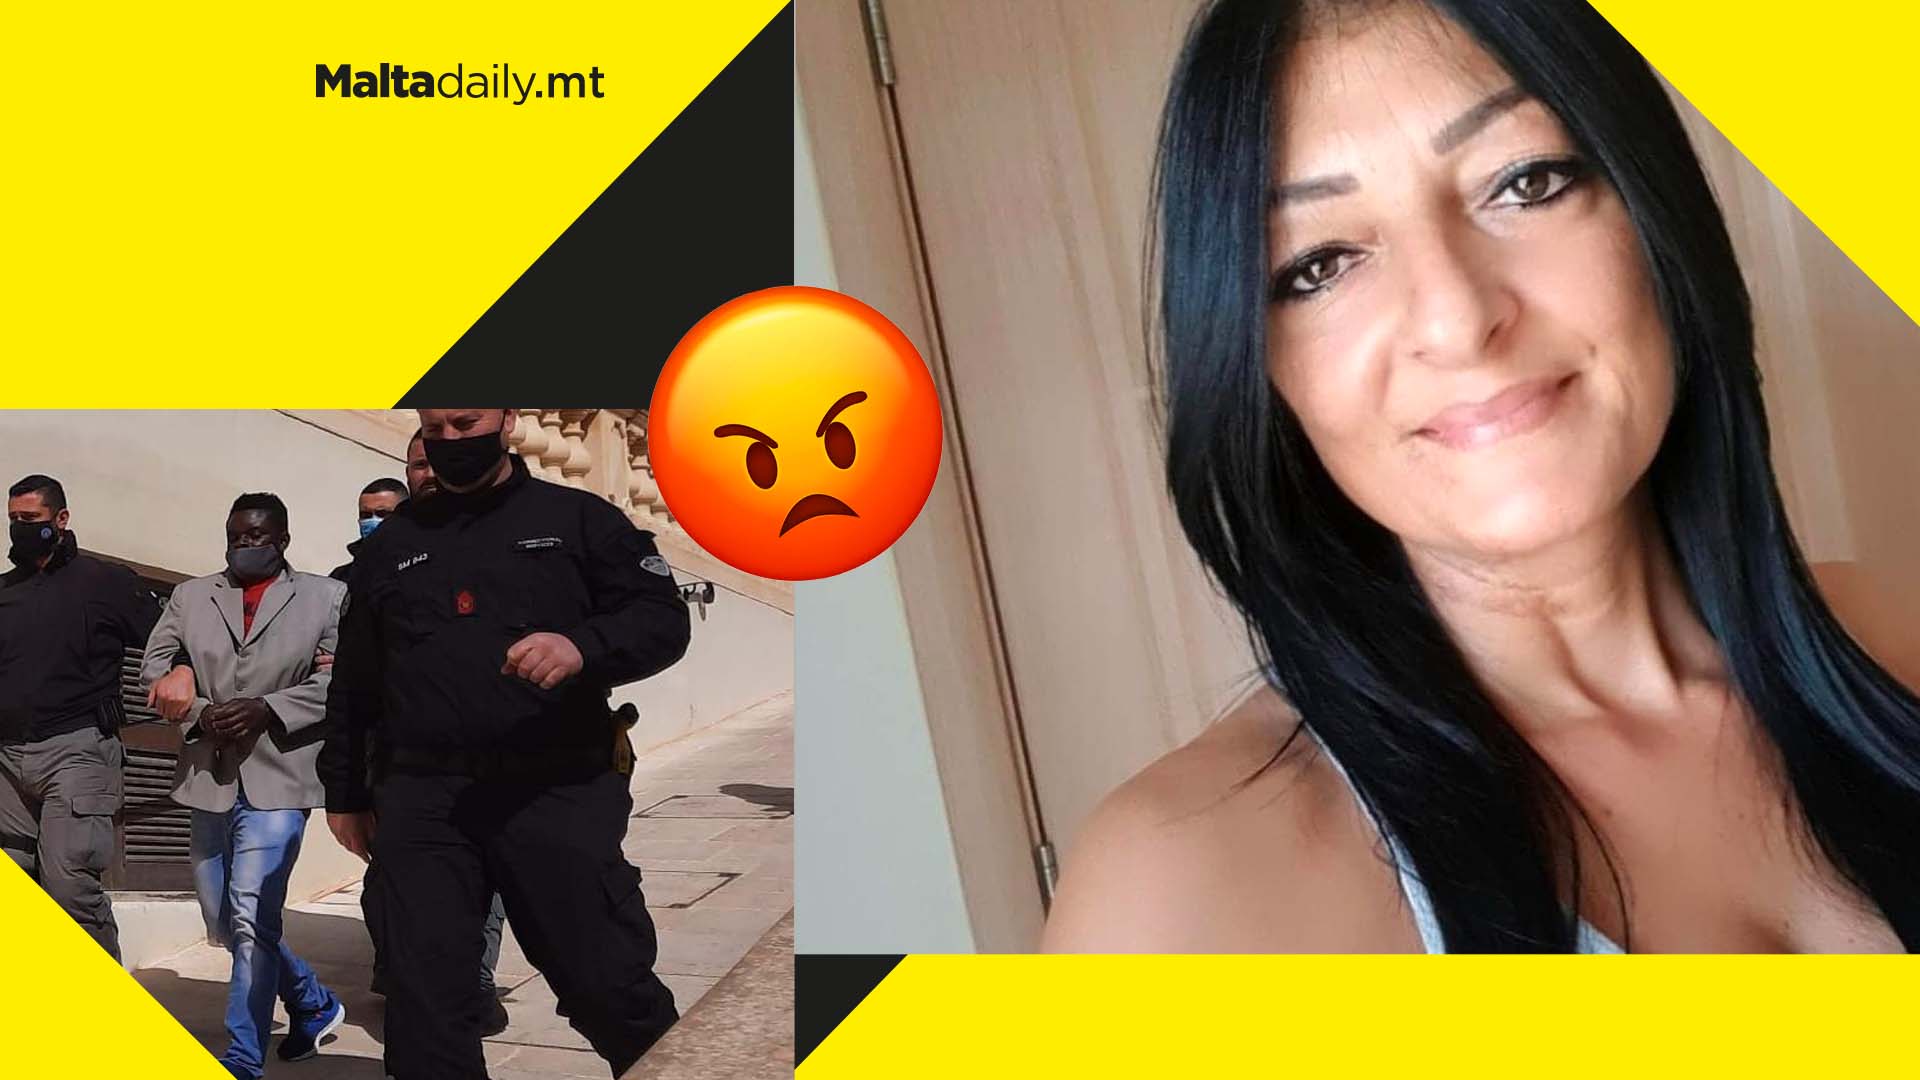 Rita Ellul’s partner spontaneously admits to strangling her during cigarette break